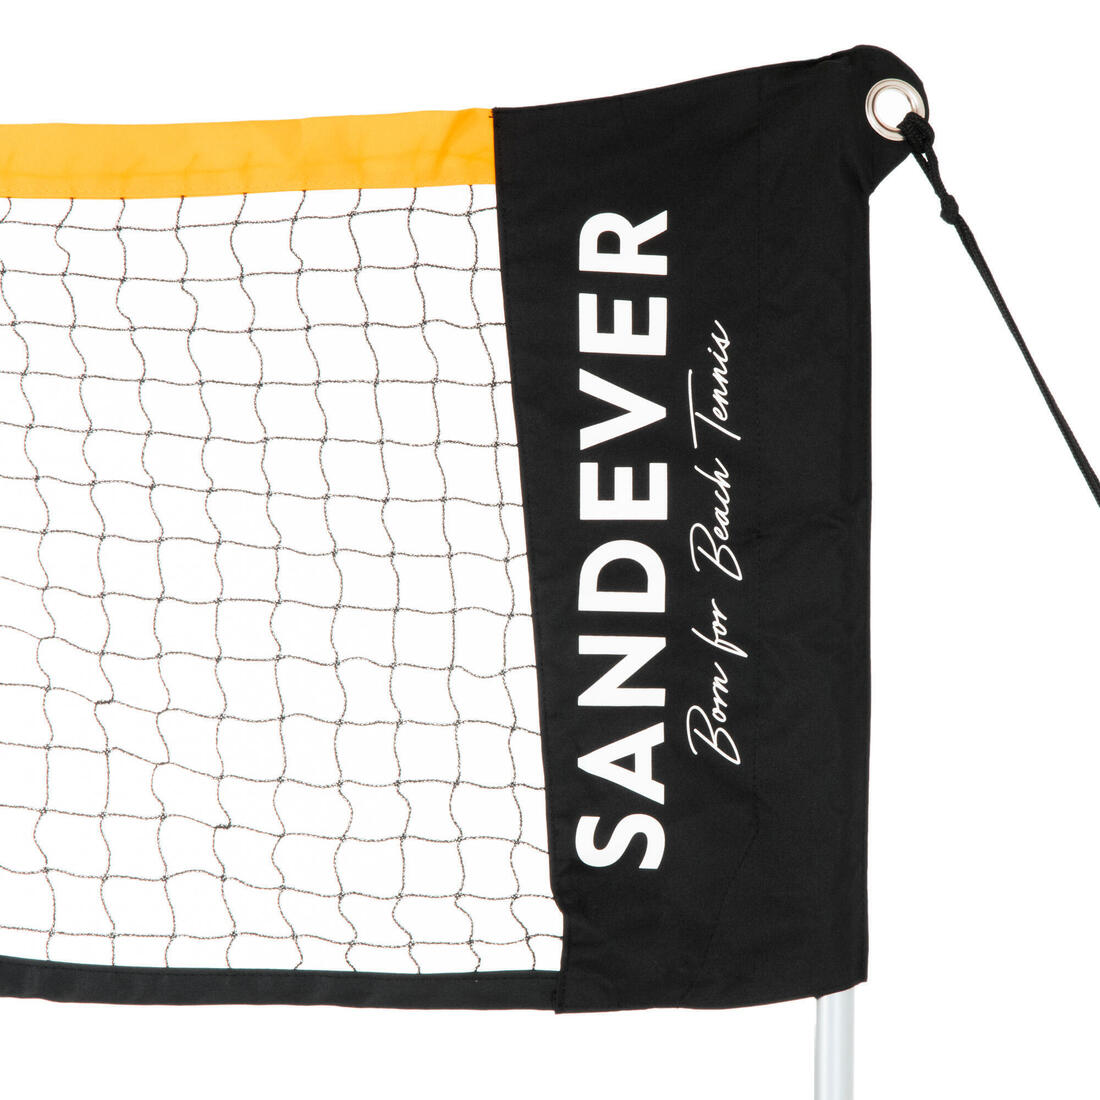 SANDEVER (サンドエバー) ビーチテニス ラケットセット ネット付き BTR 160